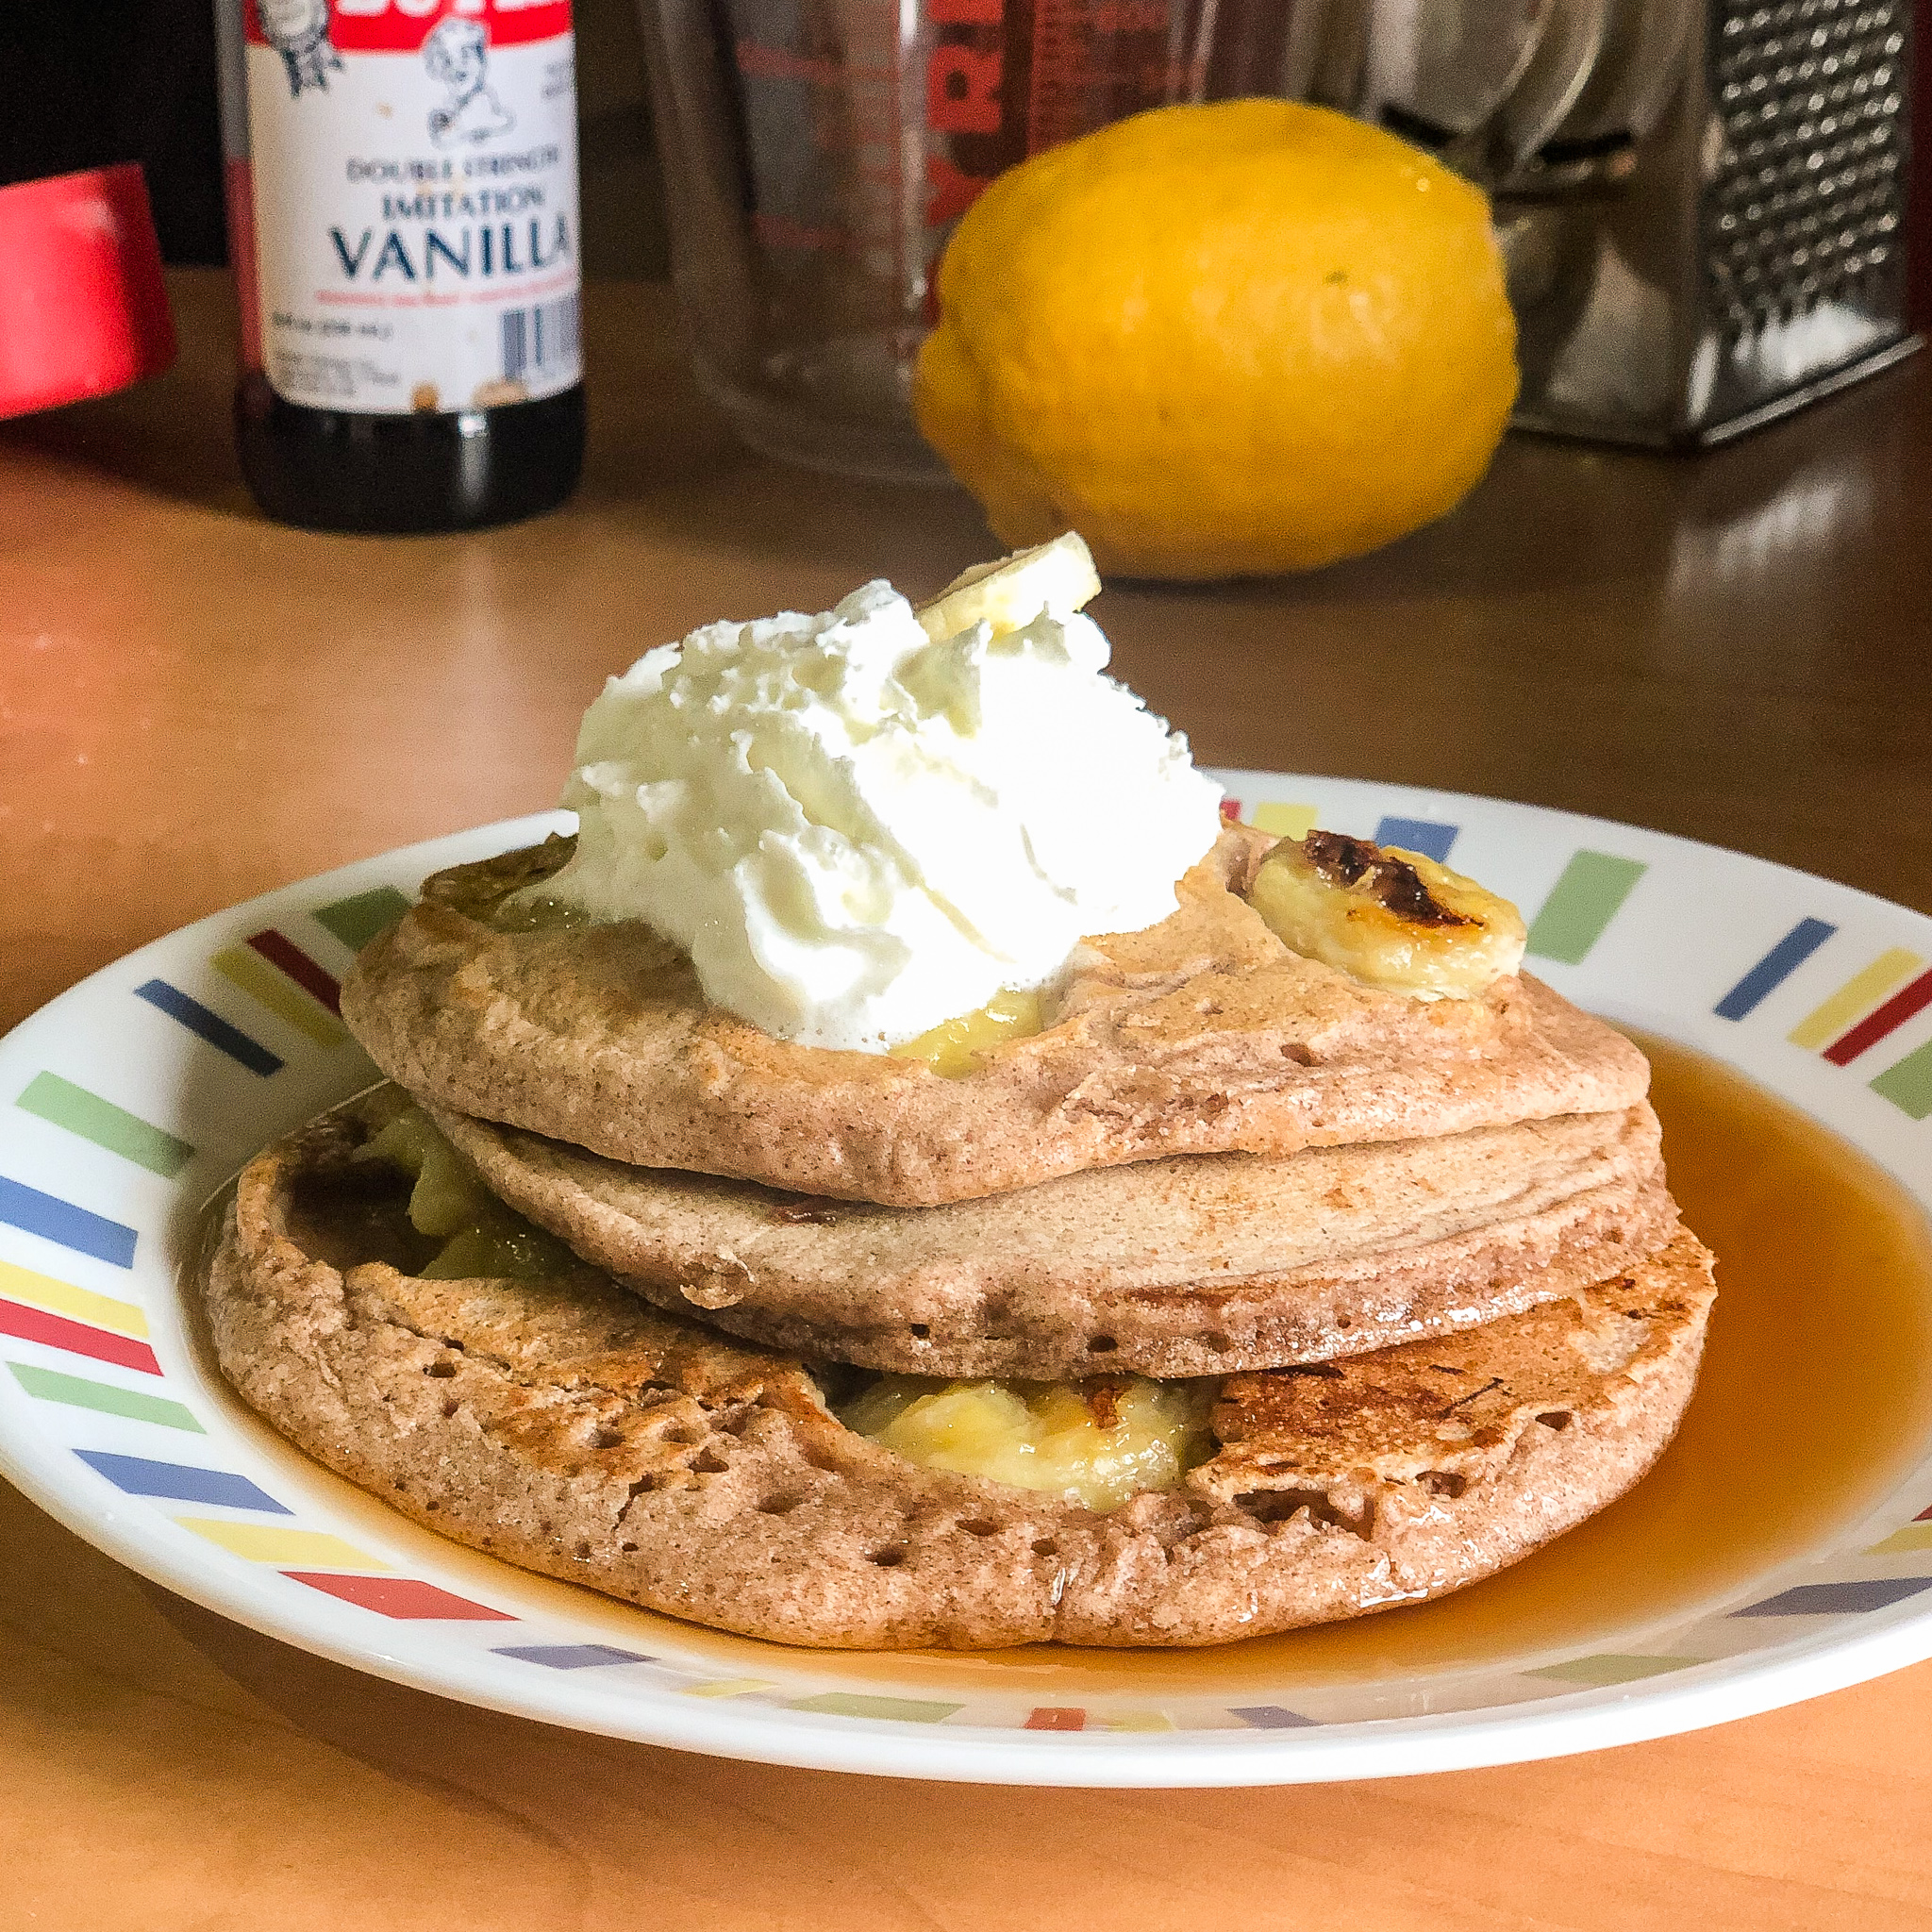 https://clevelandwhiskey.com/wp-content/uploads/2020/05/pancakes.jpg